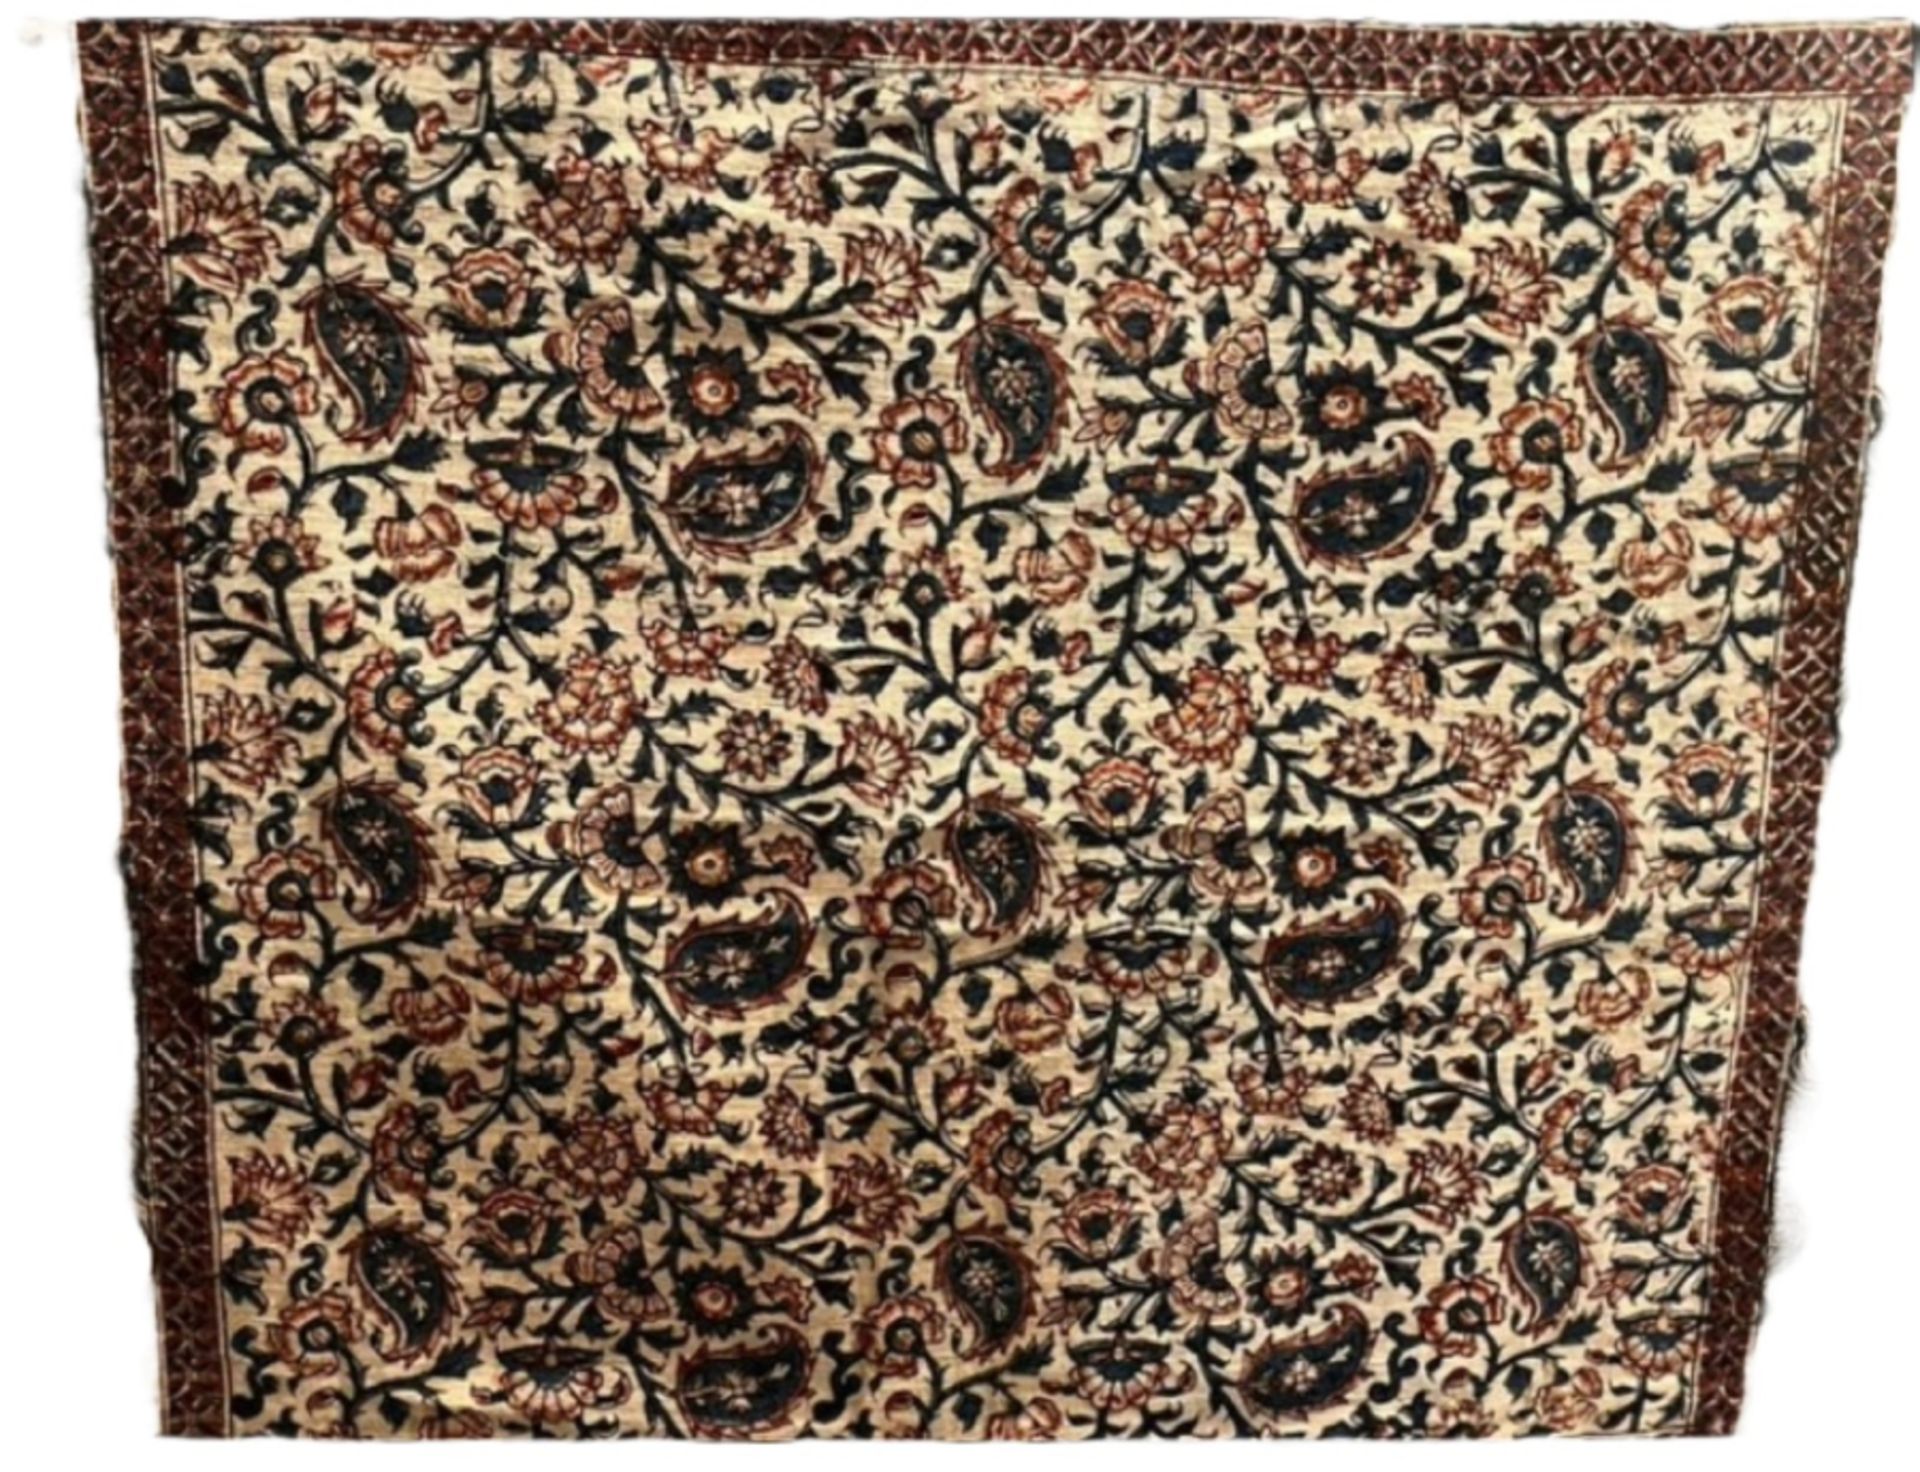 Kalamkari textile with islamic calligraphy - Image 8 of 12